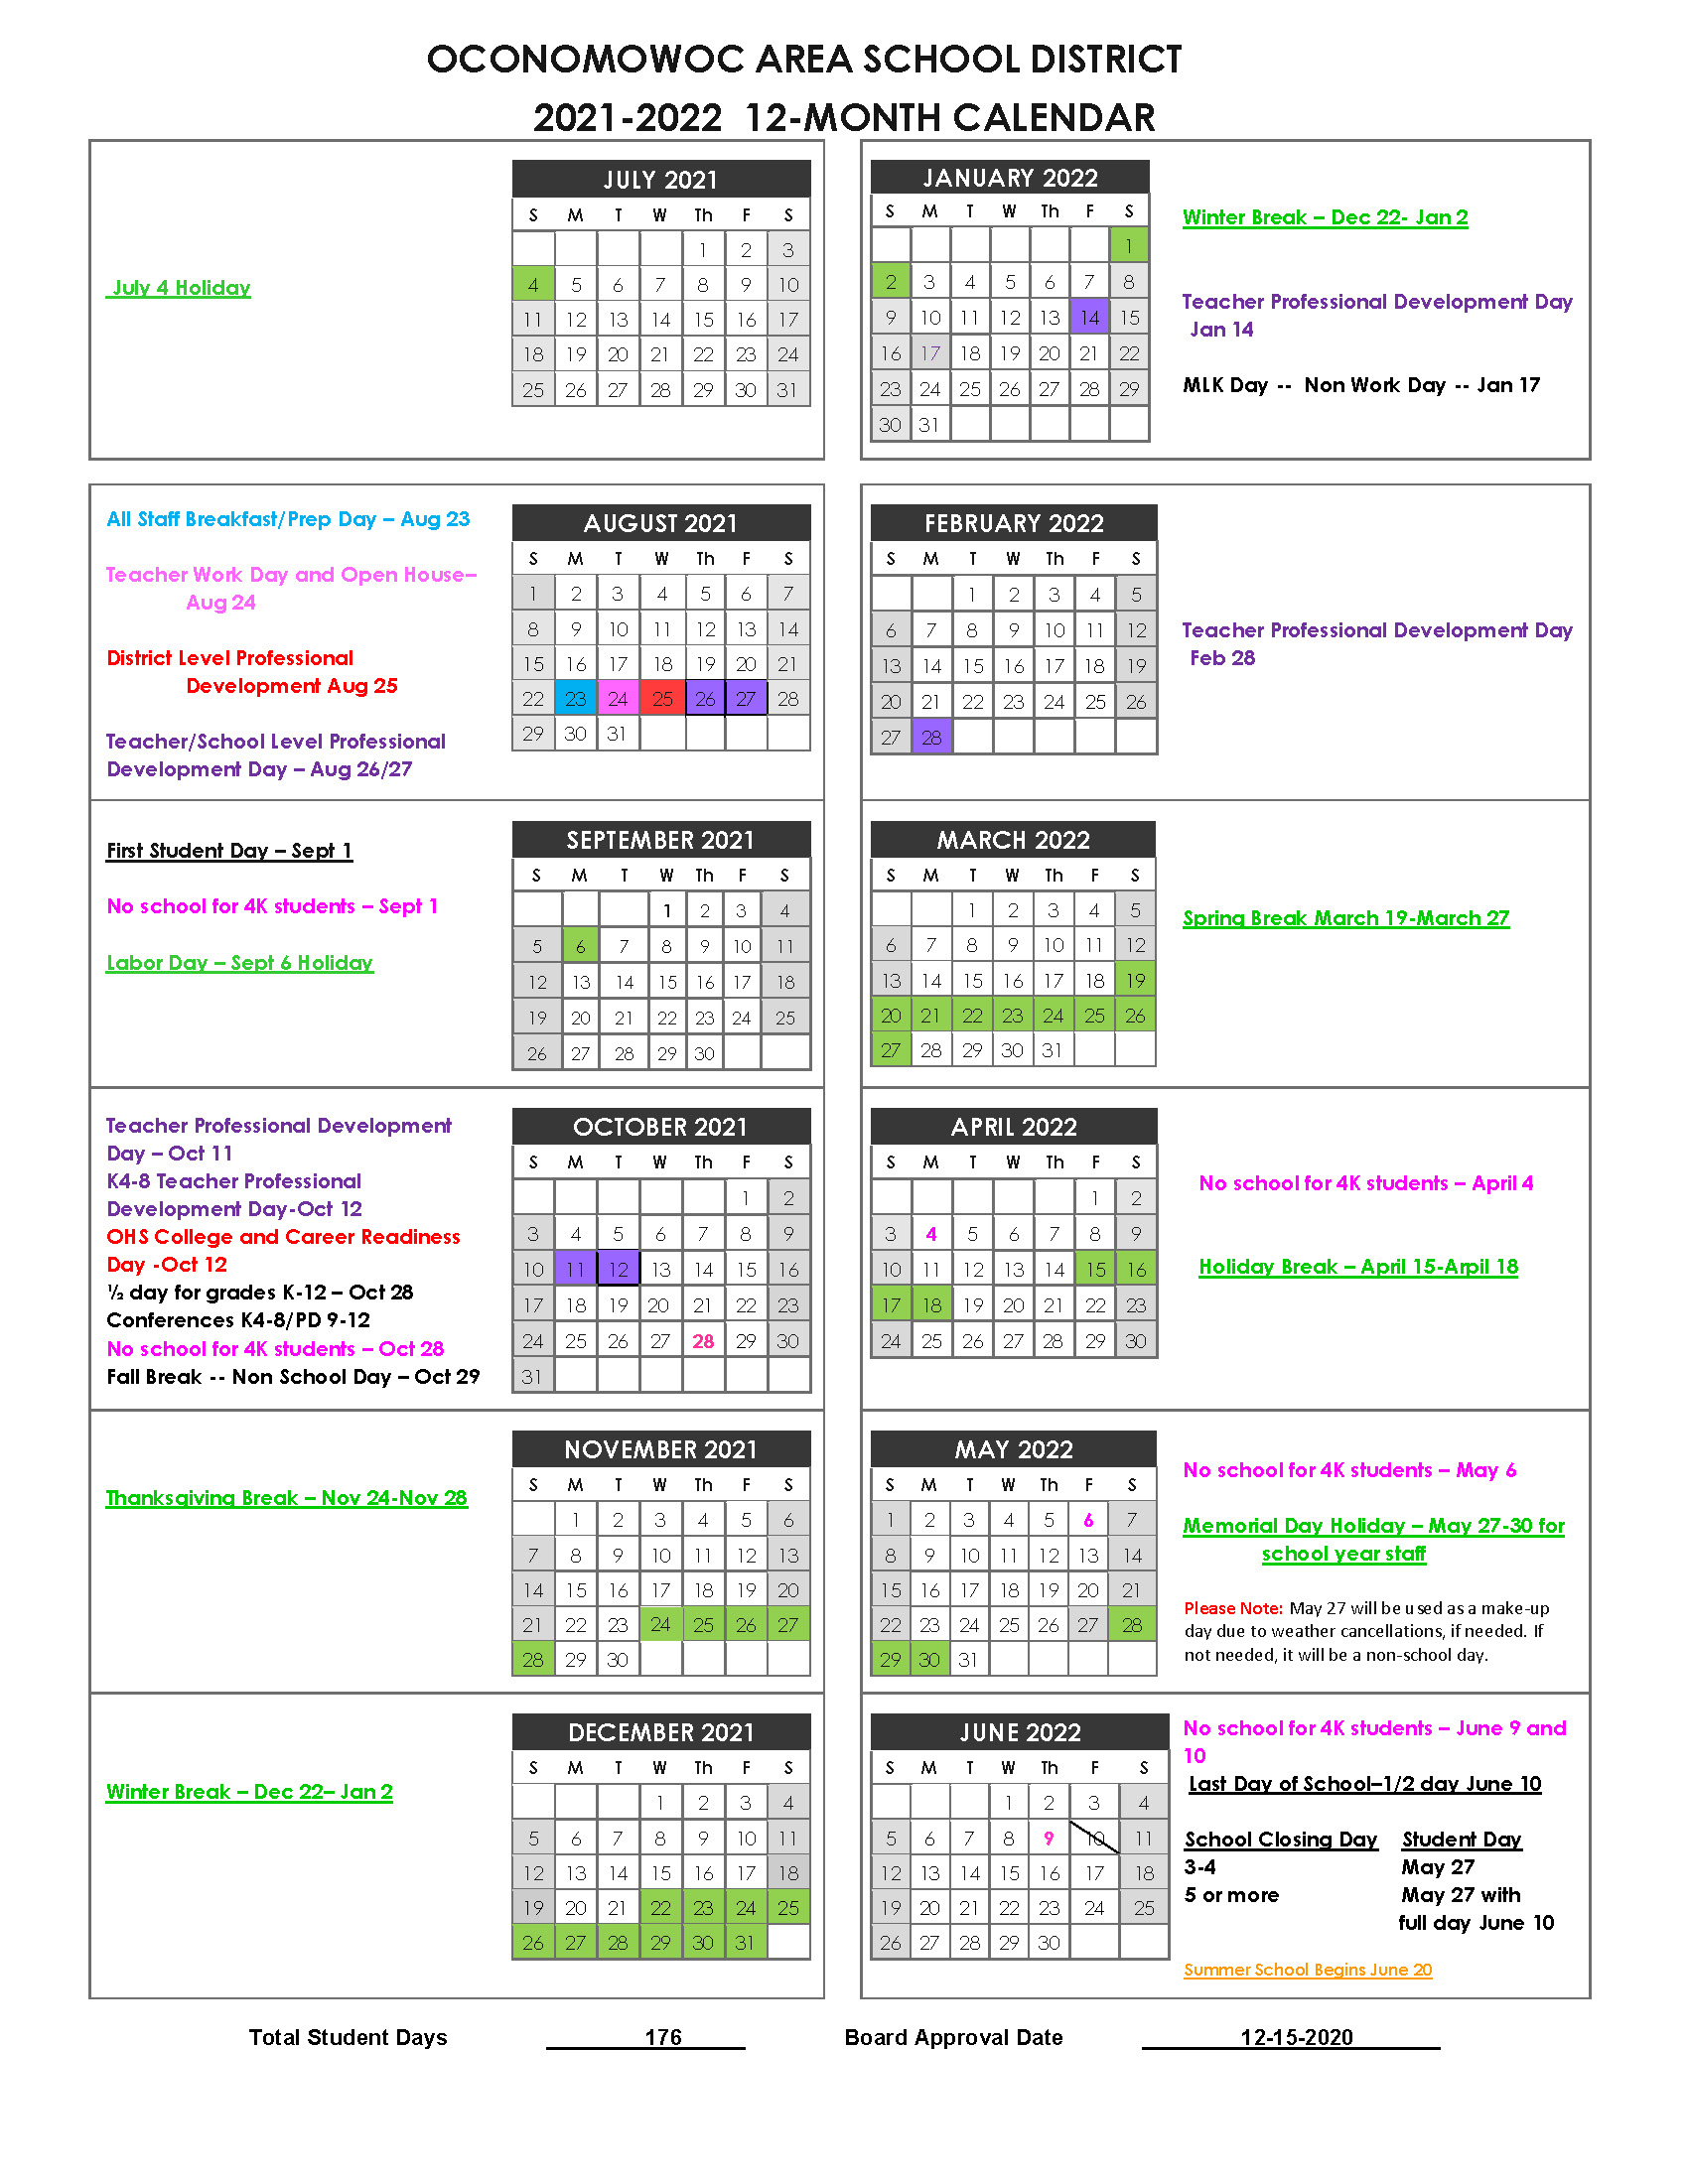 Oconomowoc Area School District: School Year Calendar